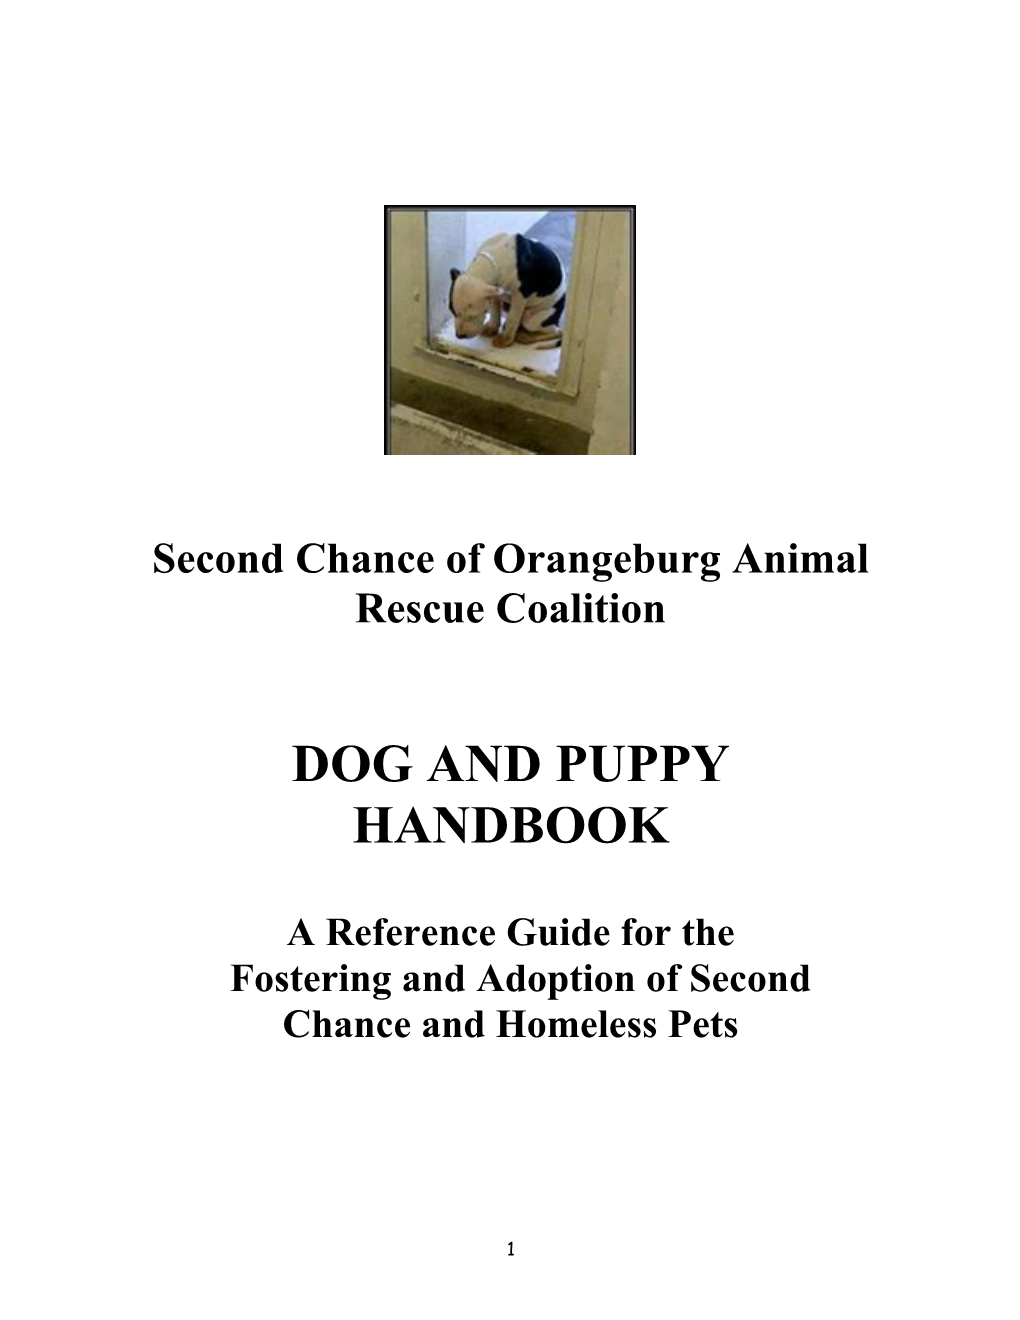 Second Chance of Orangeburg Animal Rescue Coalition